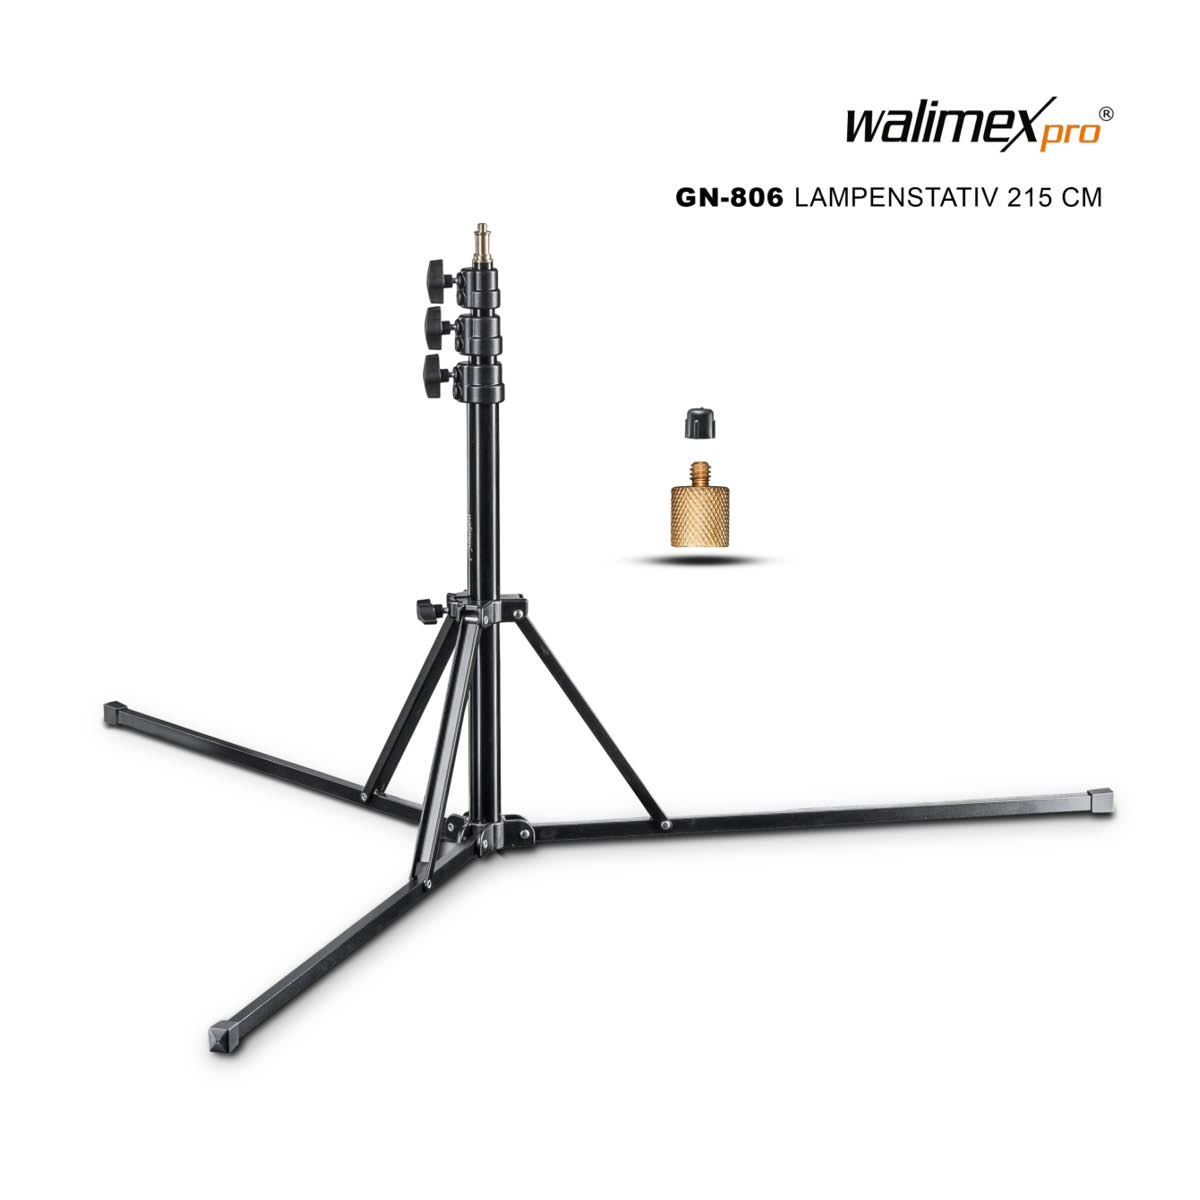 Walimex pro GN-806 Lampenstativ 215 cm